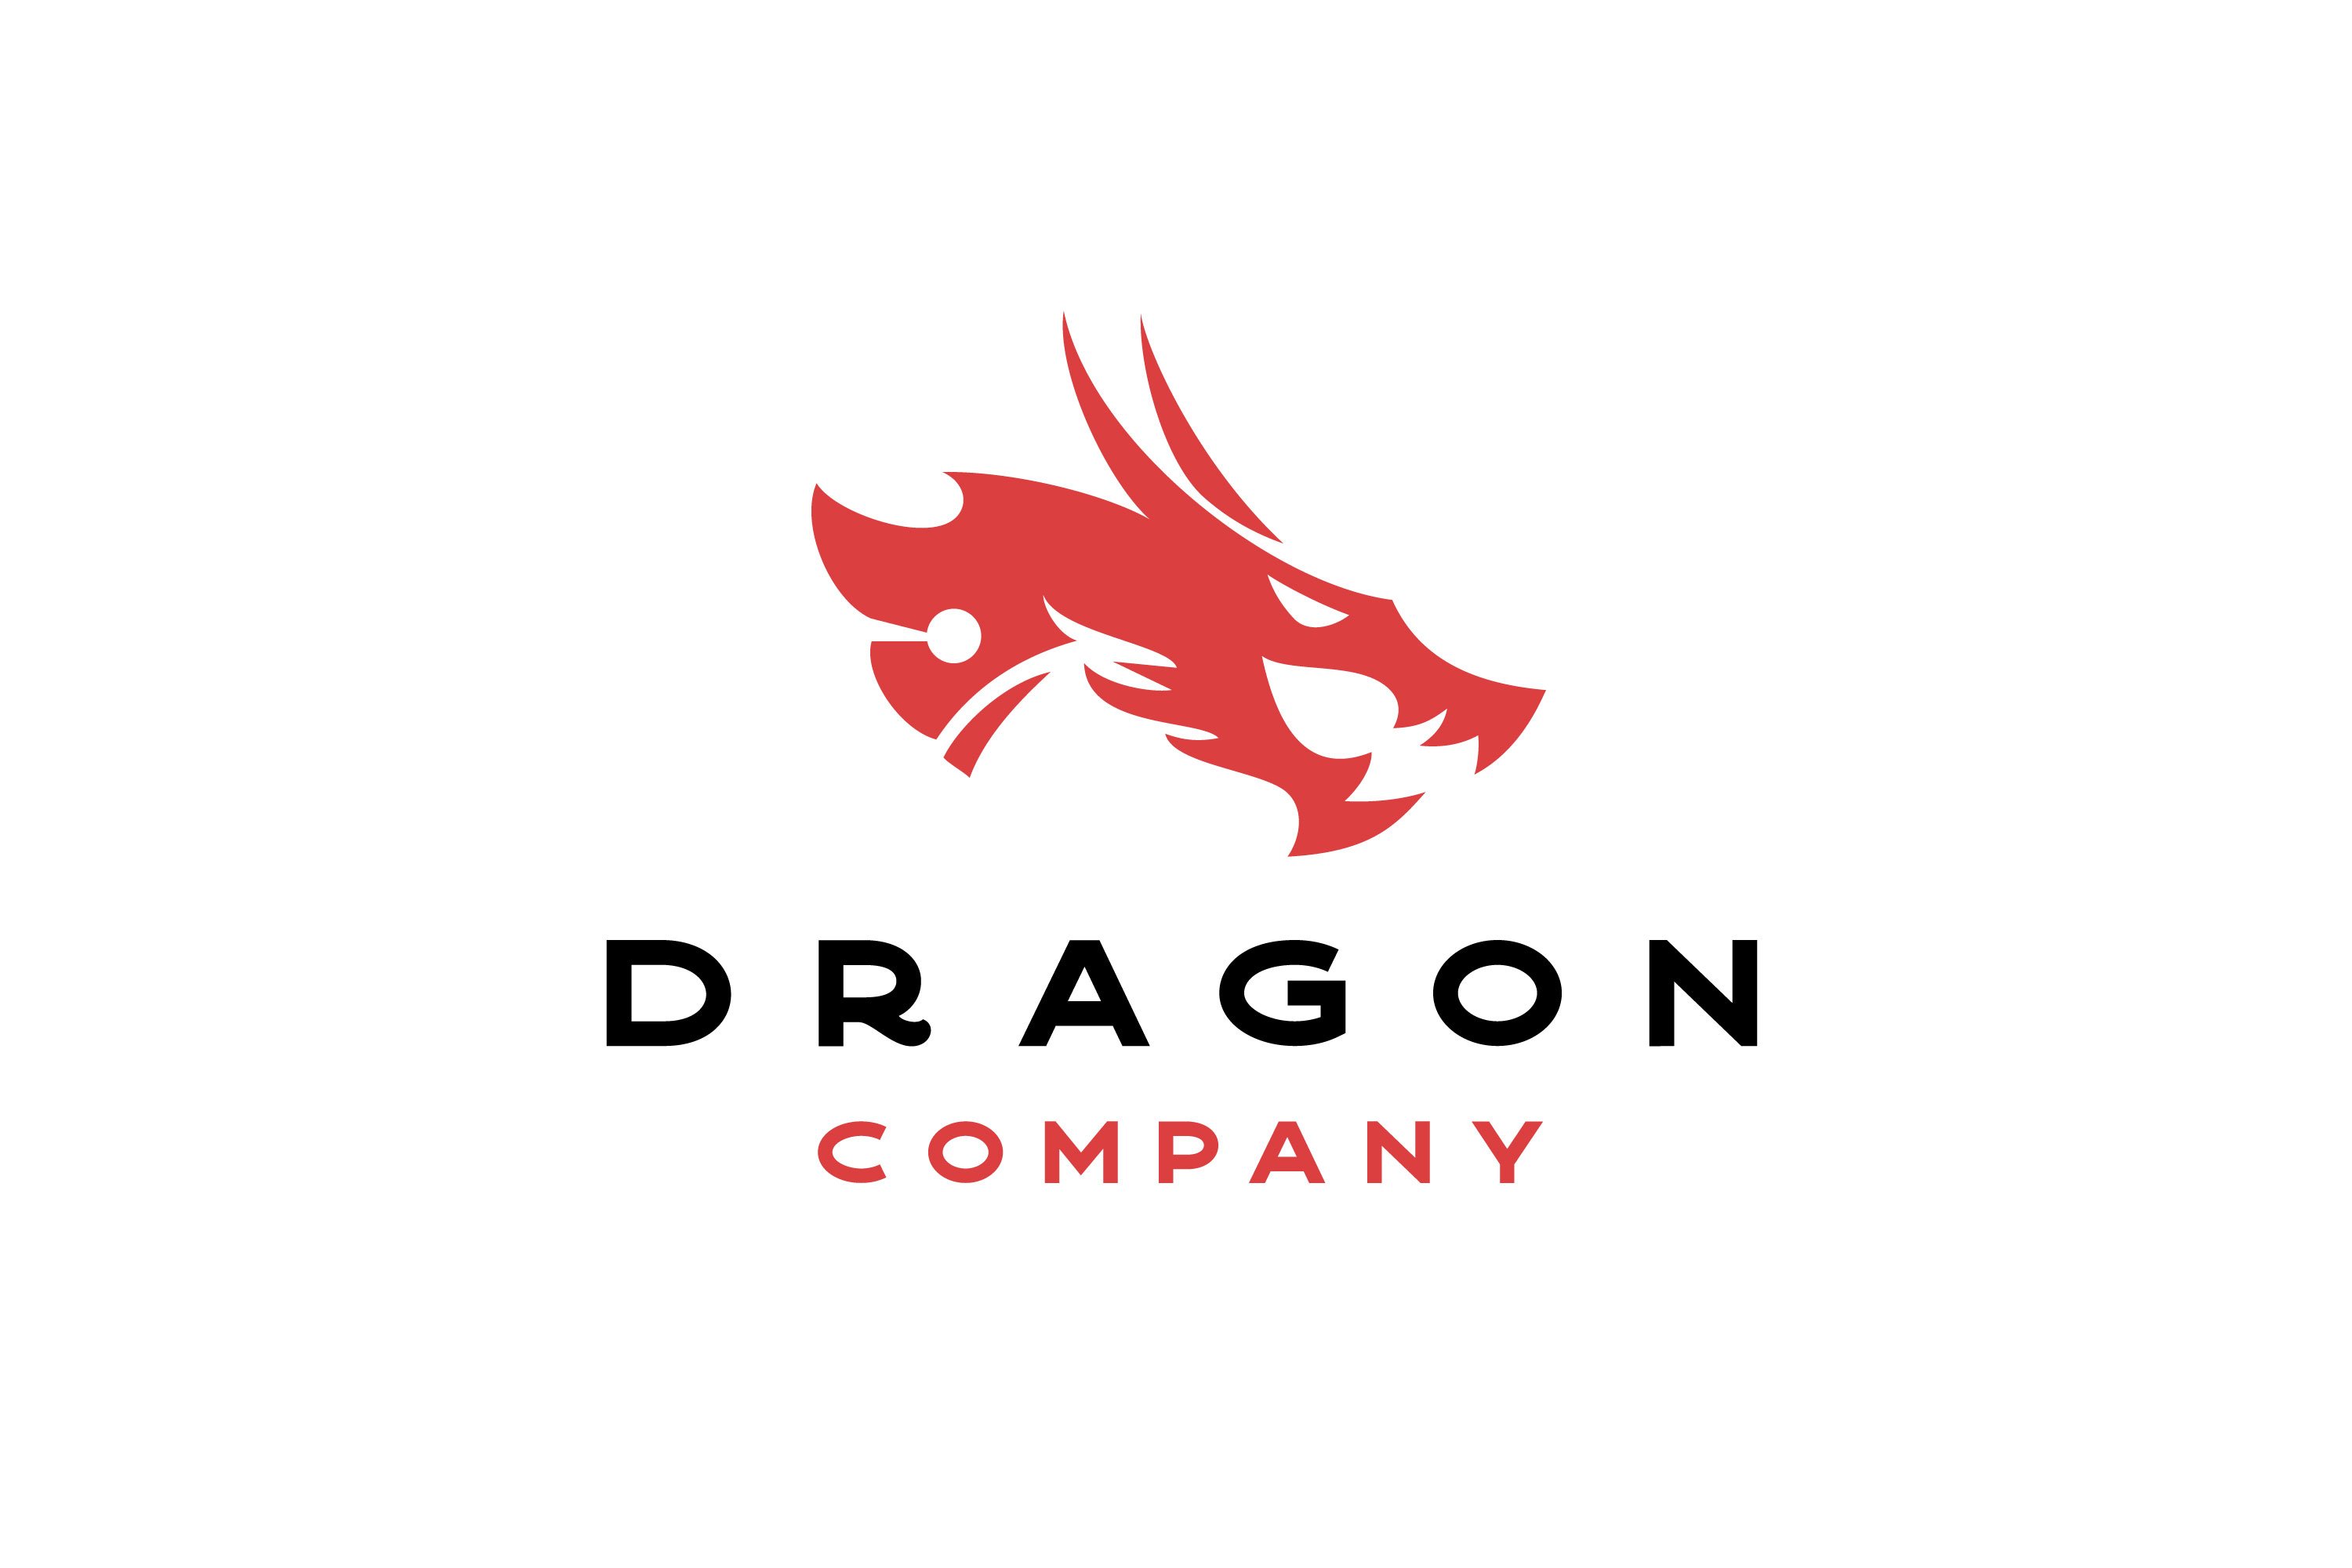 Dragon head logo design template cover image.